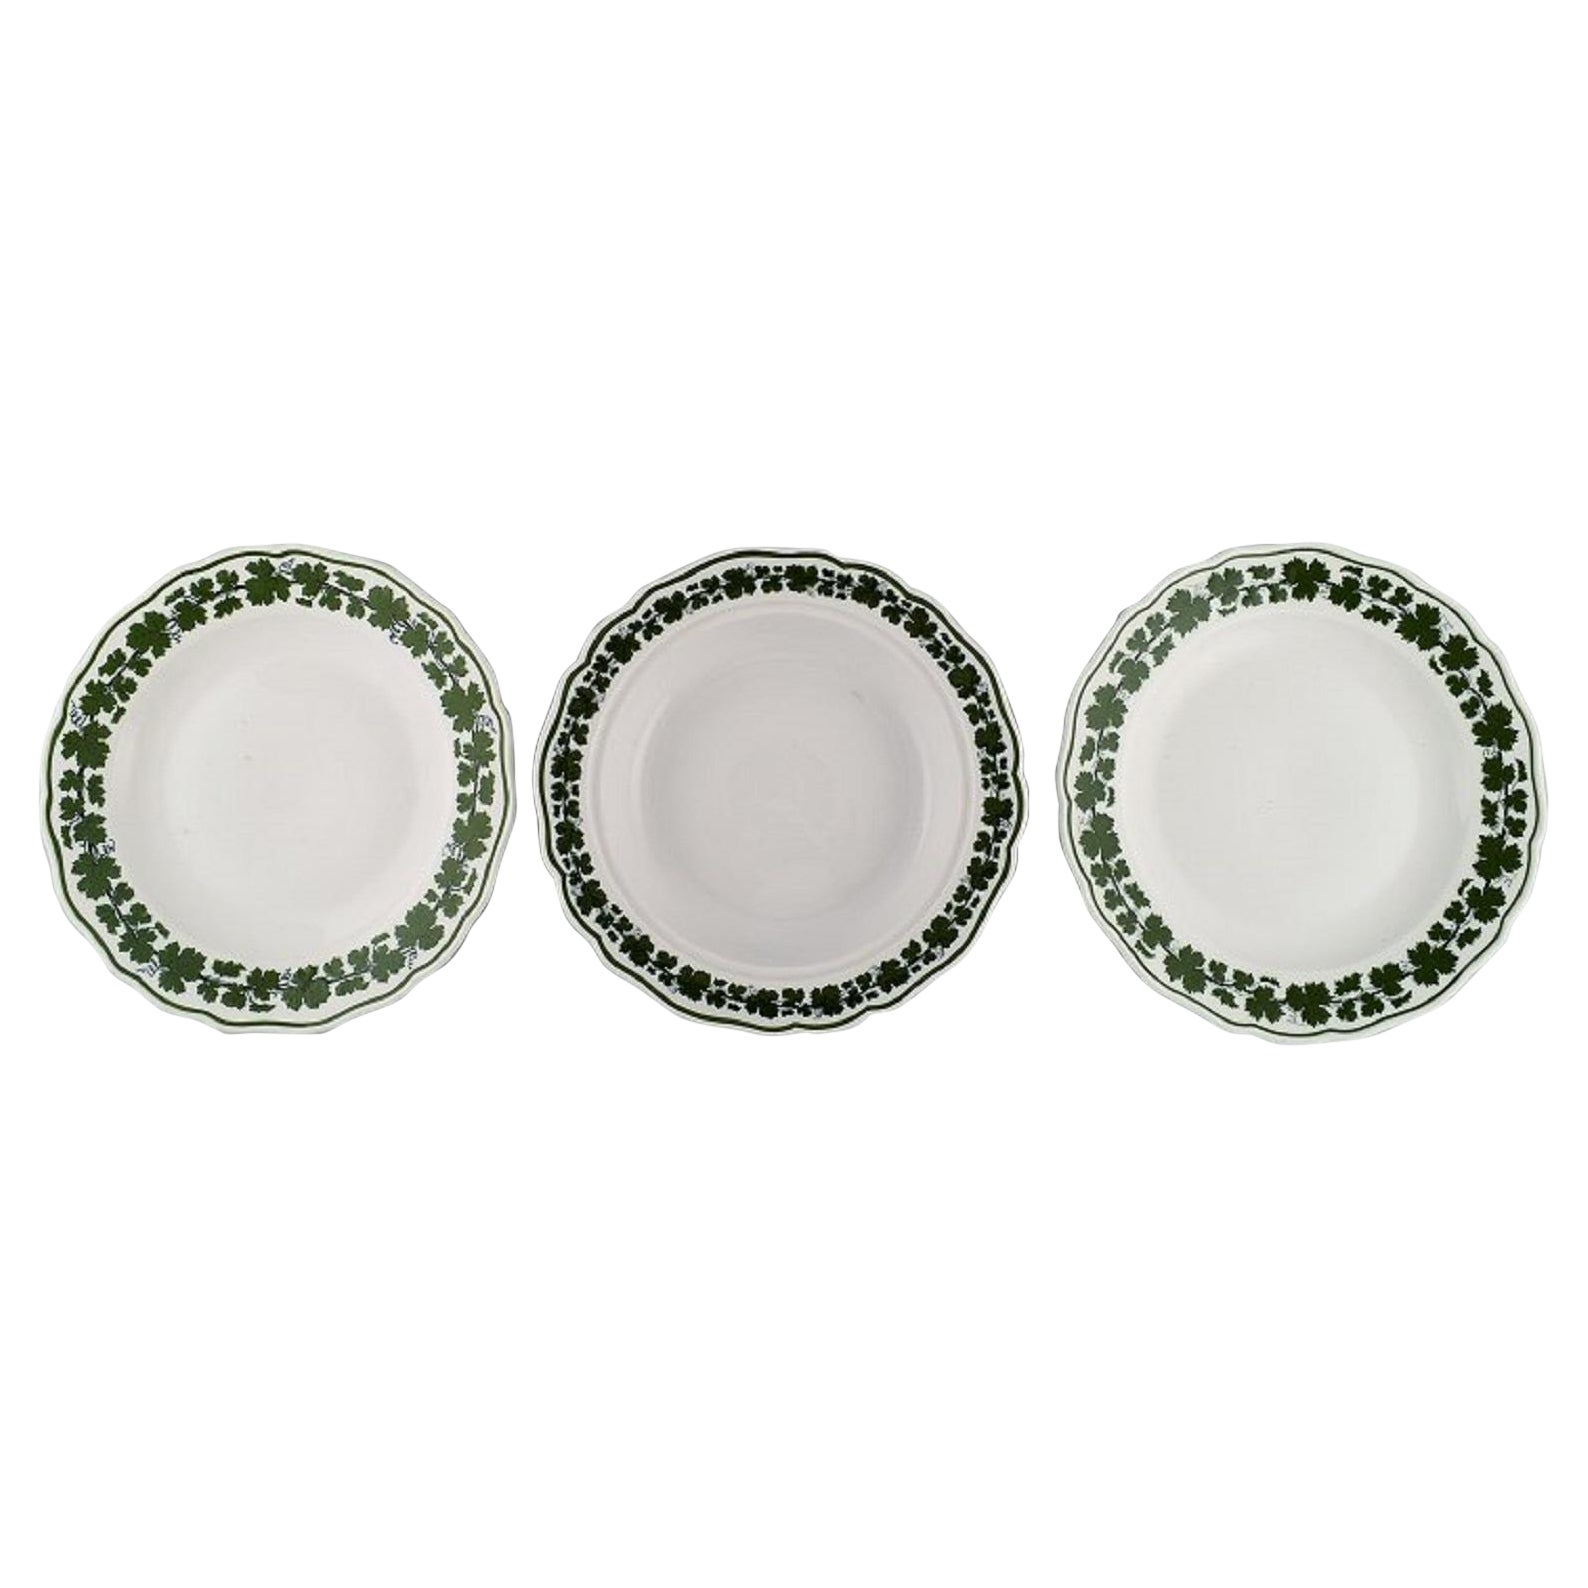 Drei grüne Meissener Efeu-Blätterteller aus handbemaltem Porzellan